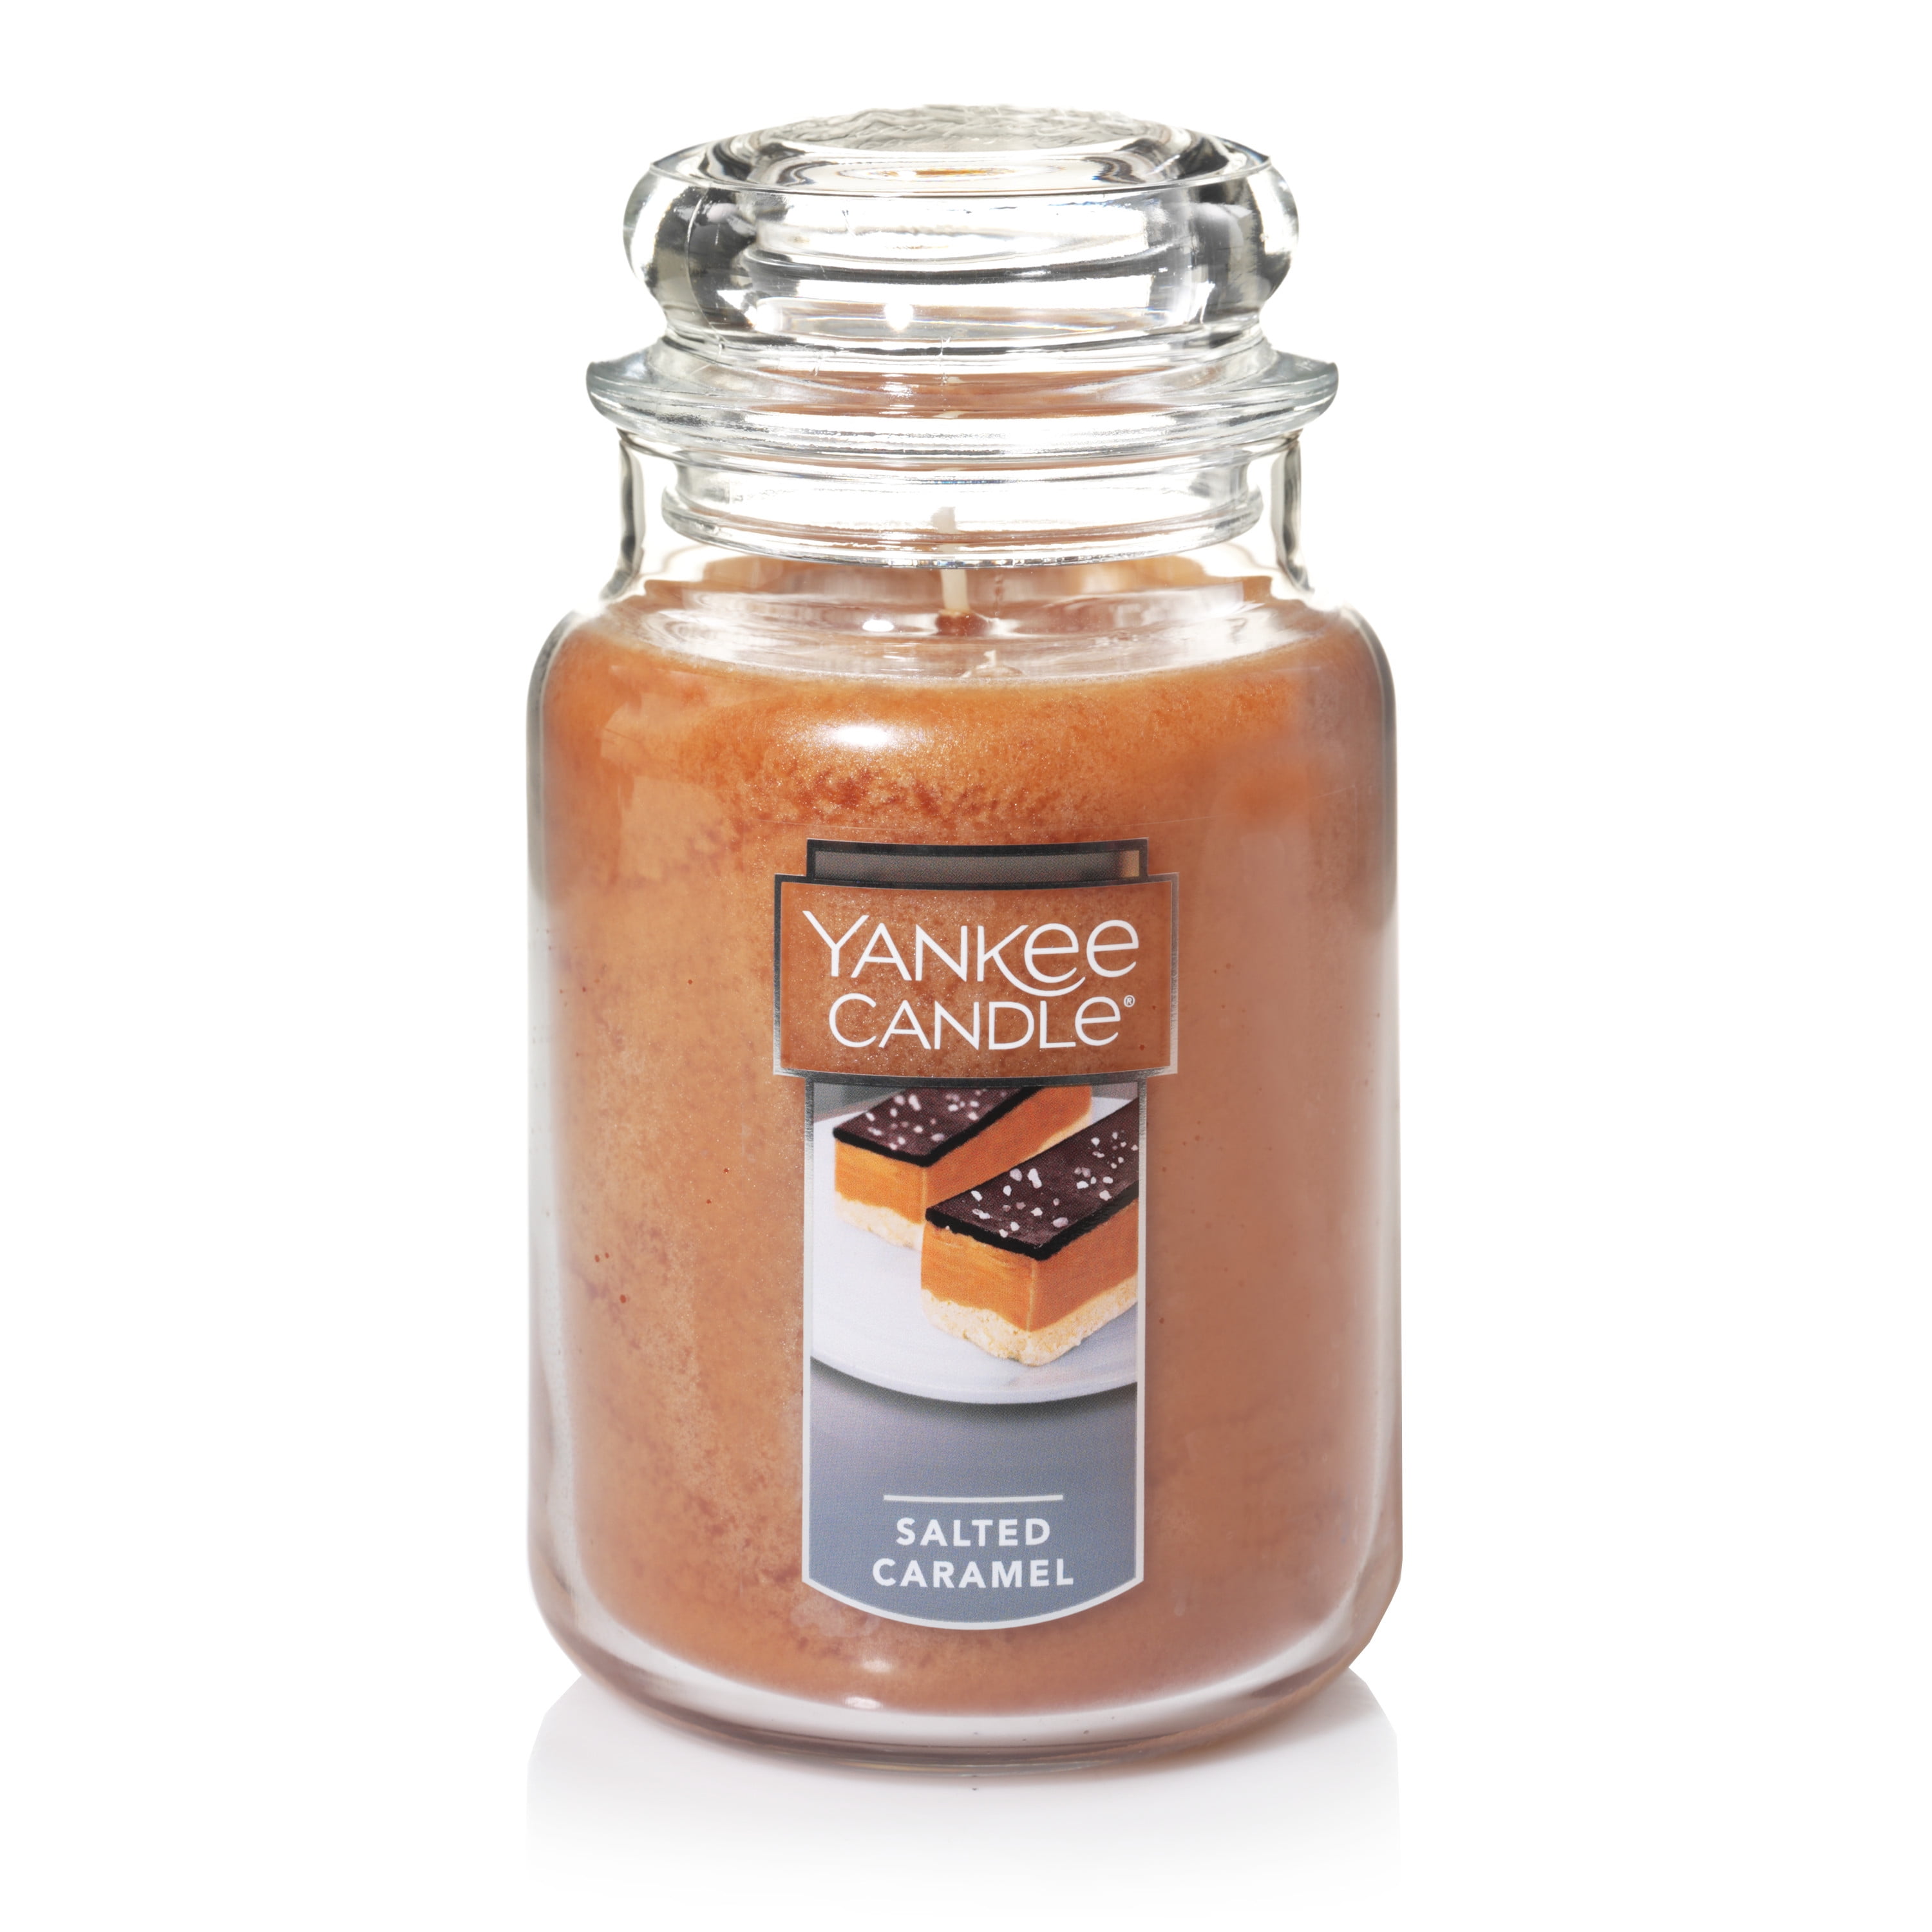 Yankee Candle Large Jar Salted Caramel paraffin grade up to 150 hour burn time